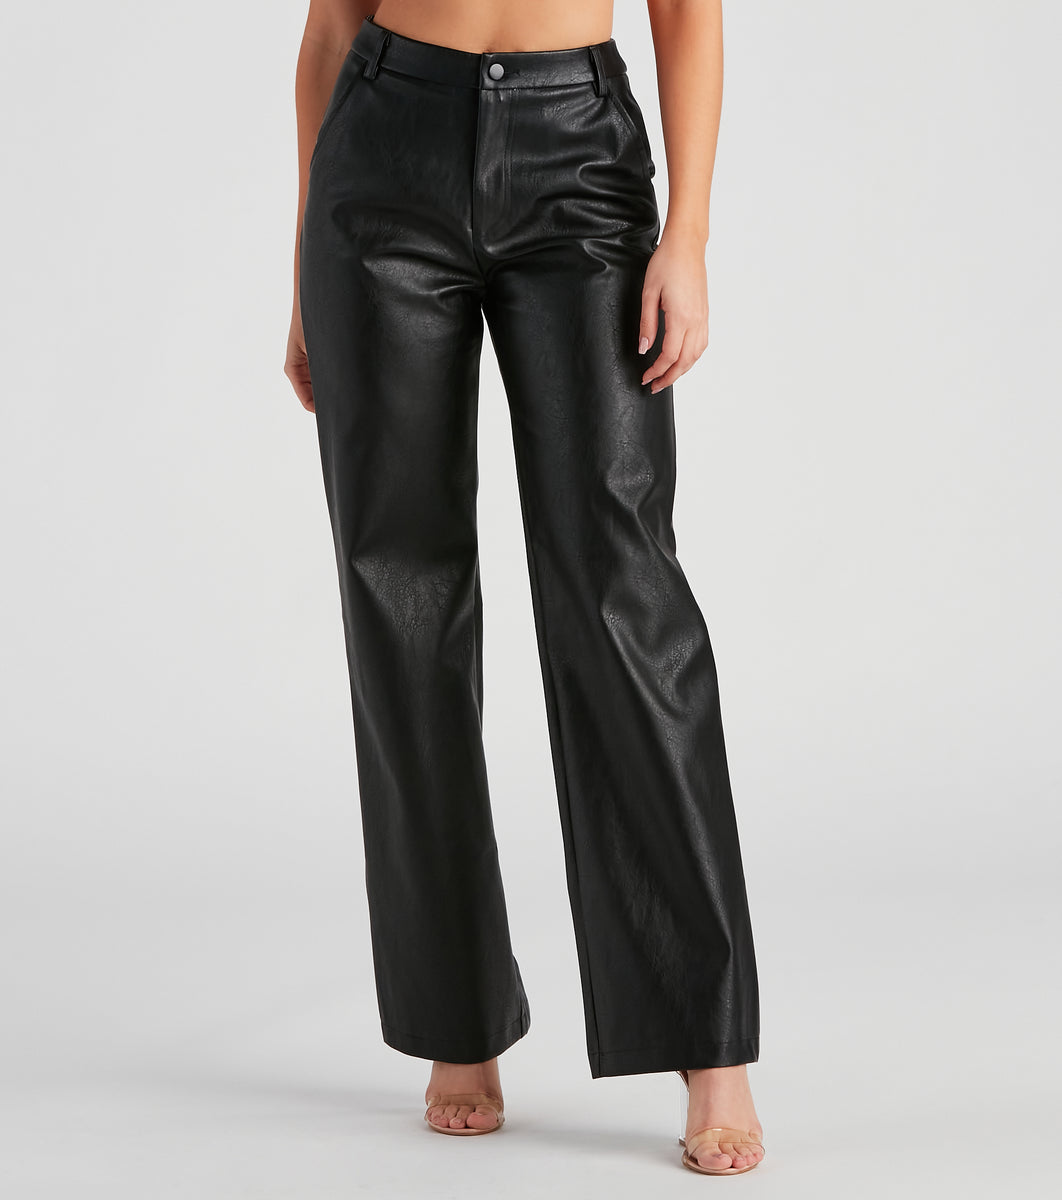 Jones New York Women's Faux Leather Pull On Pants